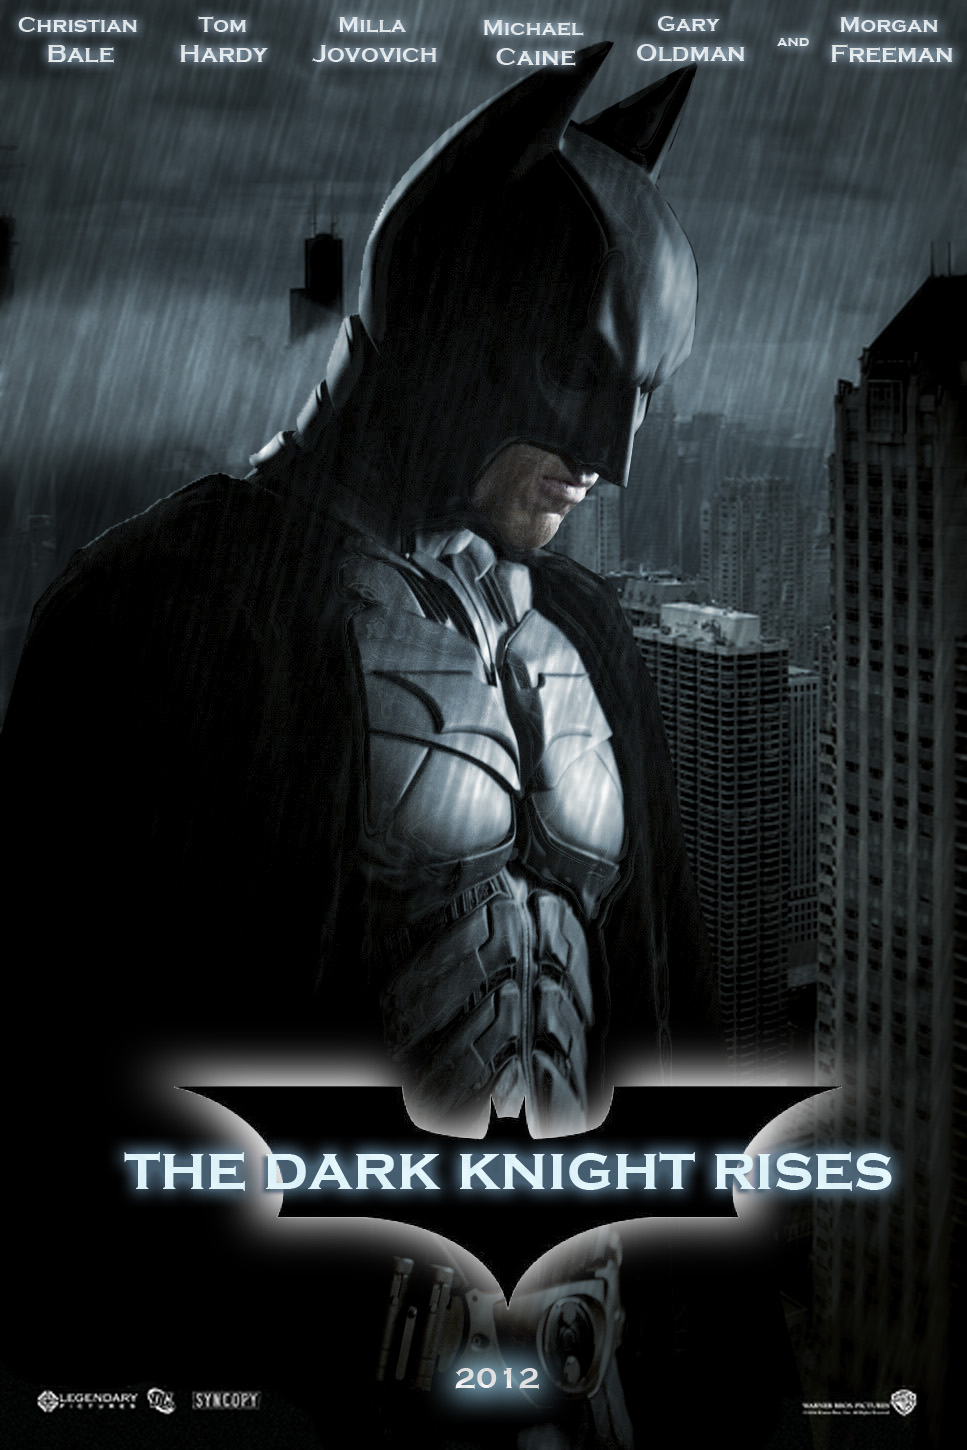 Batman The Dark Knight Rises Wallpaper All About Photo